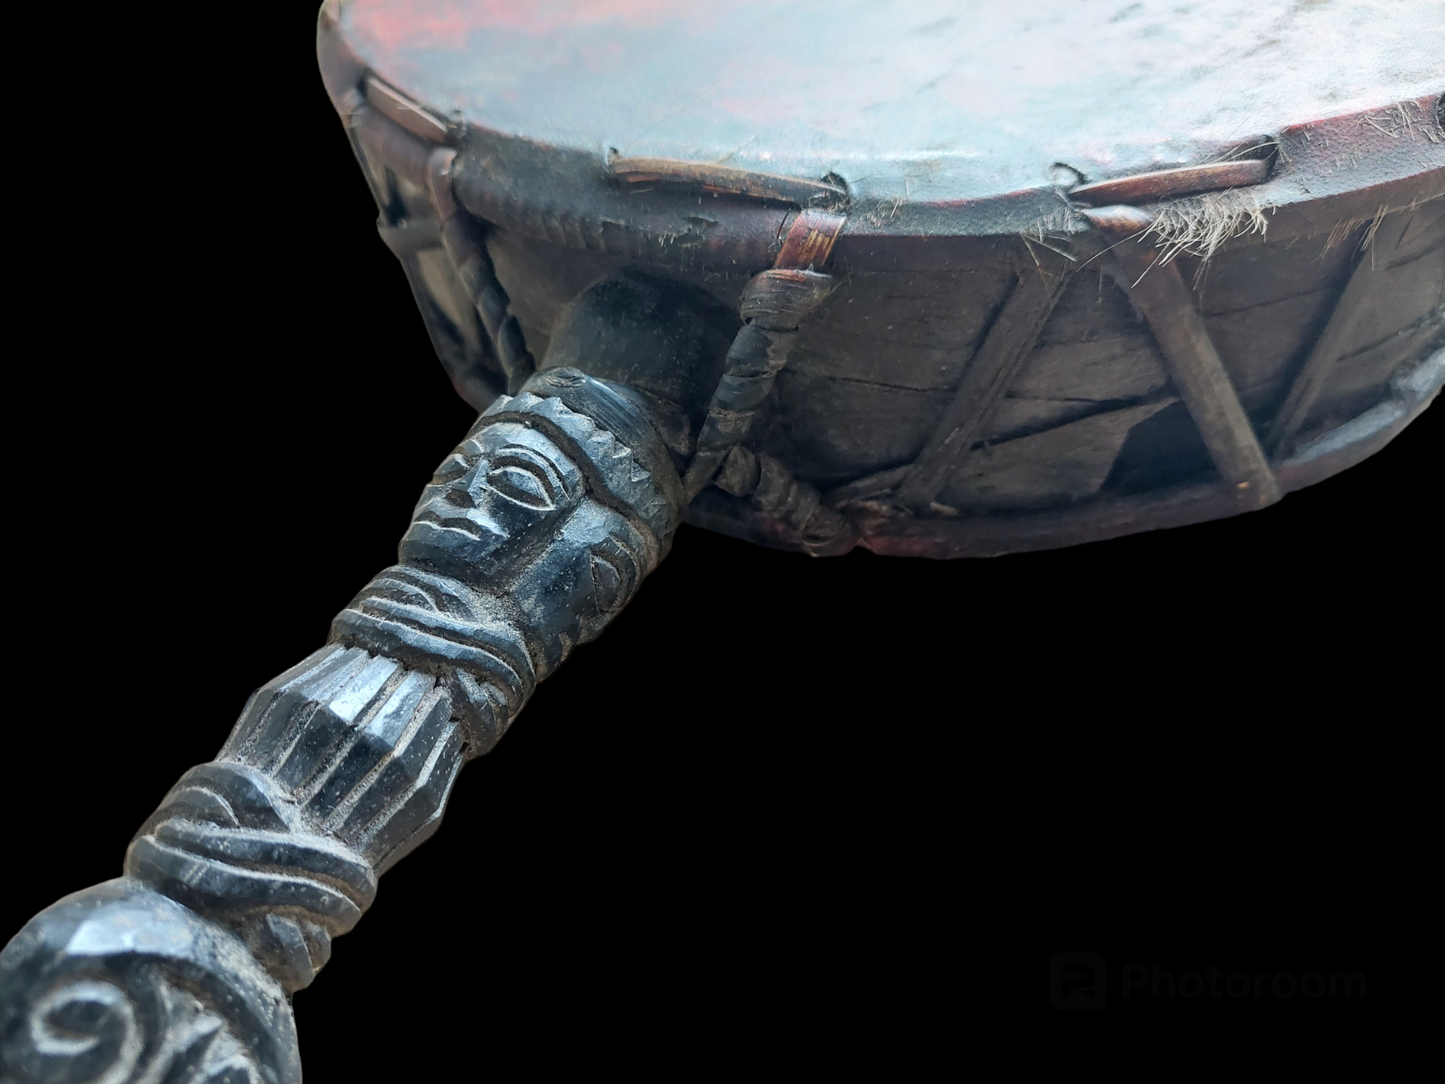 Antique Nepalese dhyangro drum #7